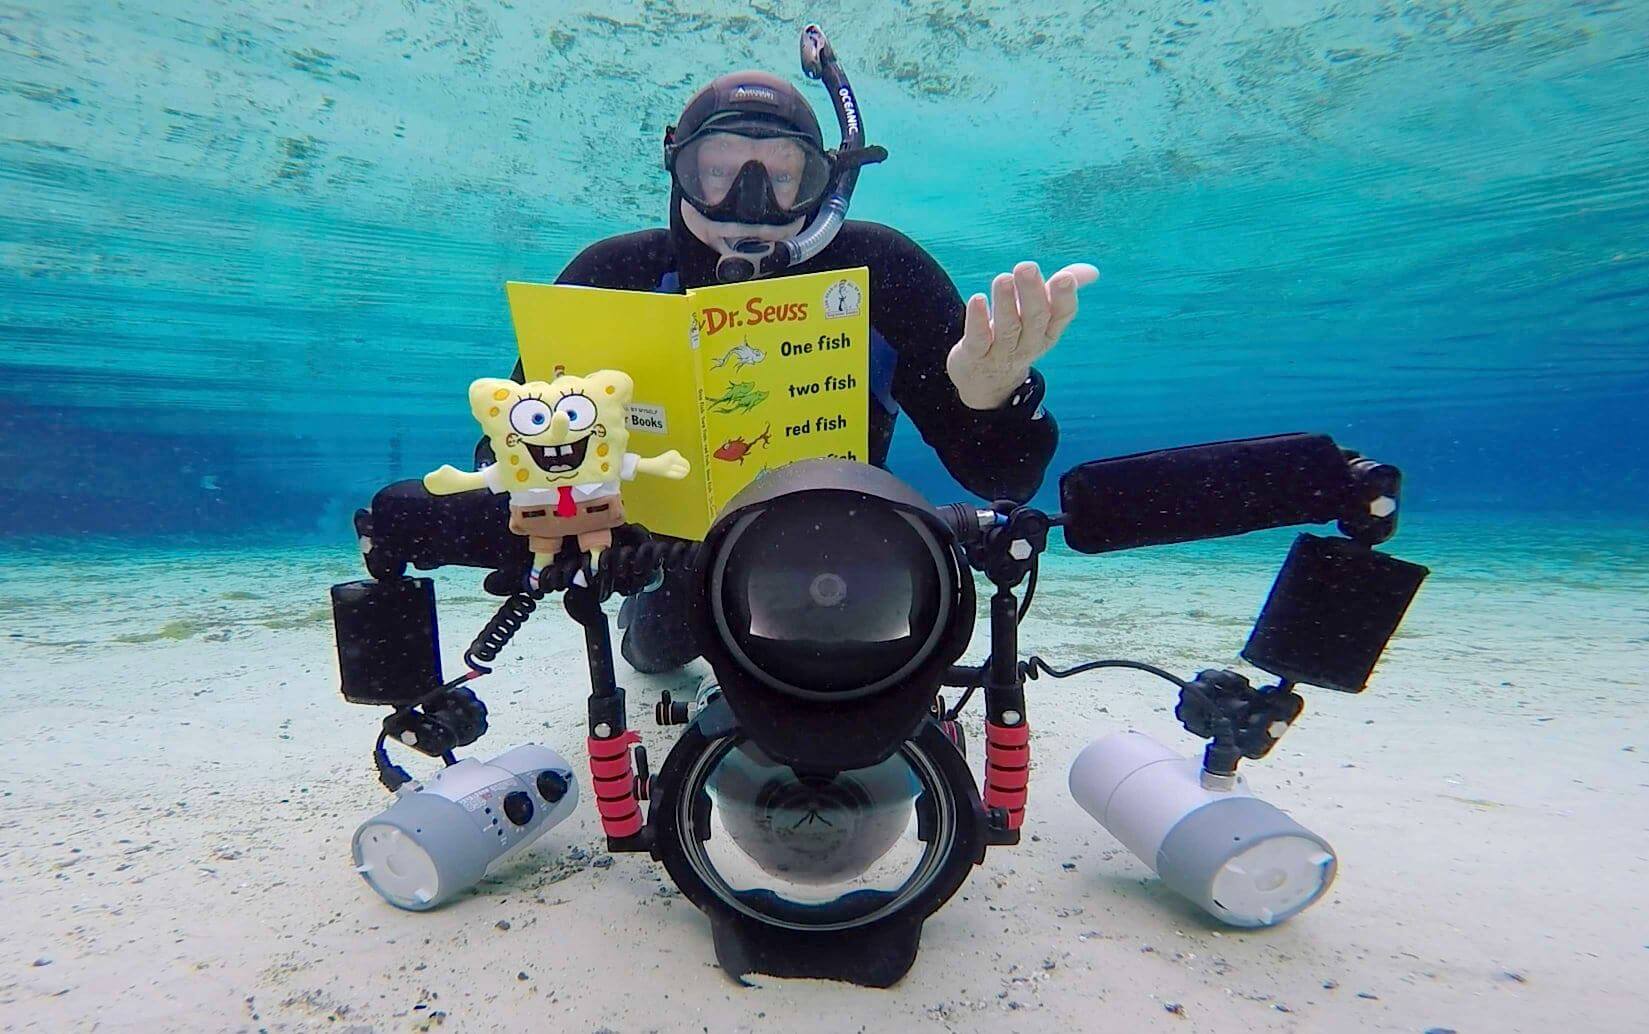 David Schrichte scuba diving with a camera and book.